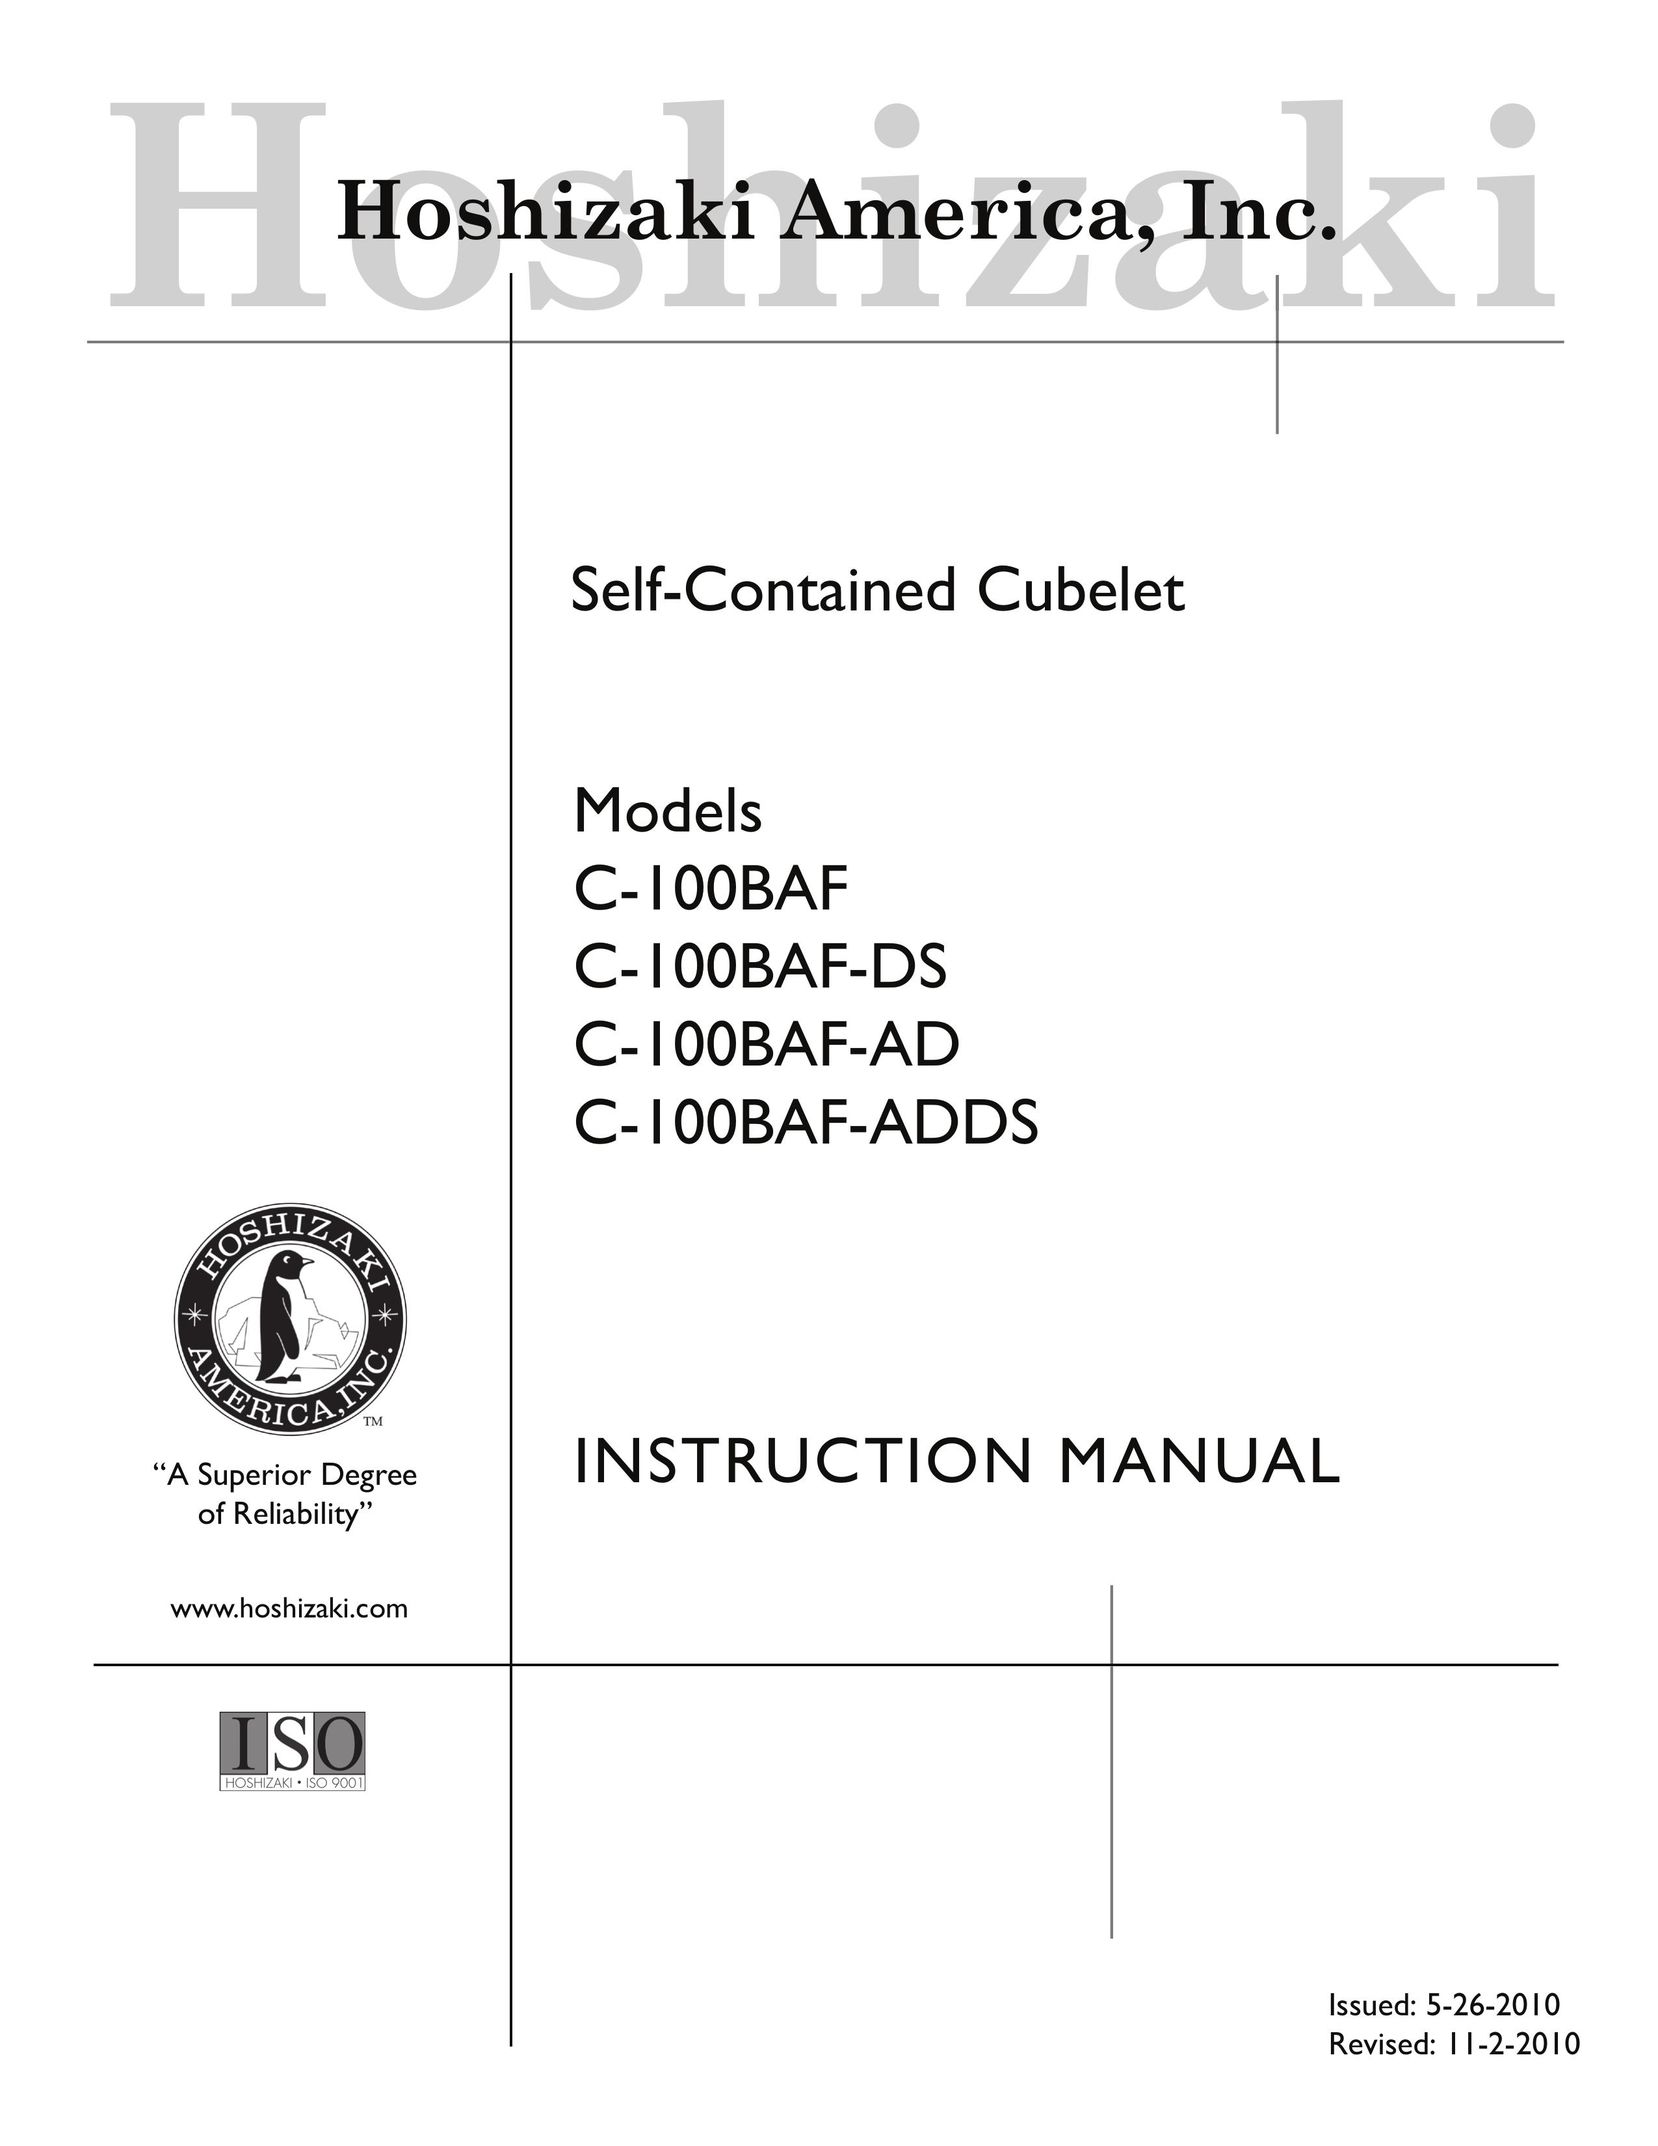 Hoshizaki C-100BAF-ADDS Ice Maker User Manual